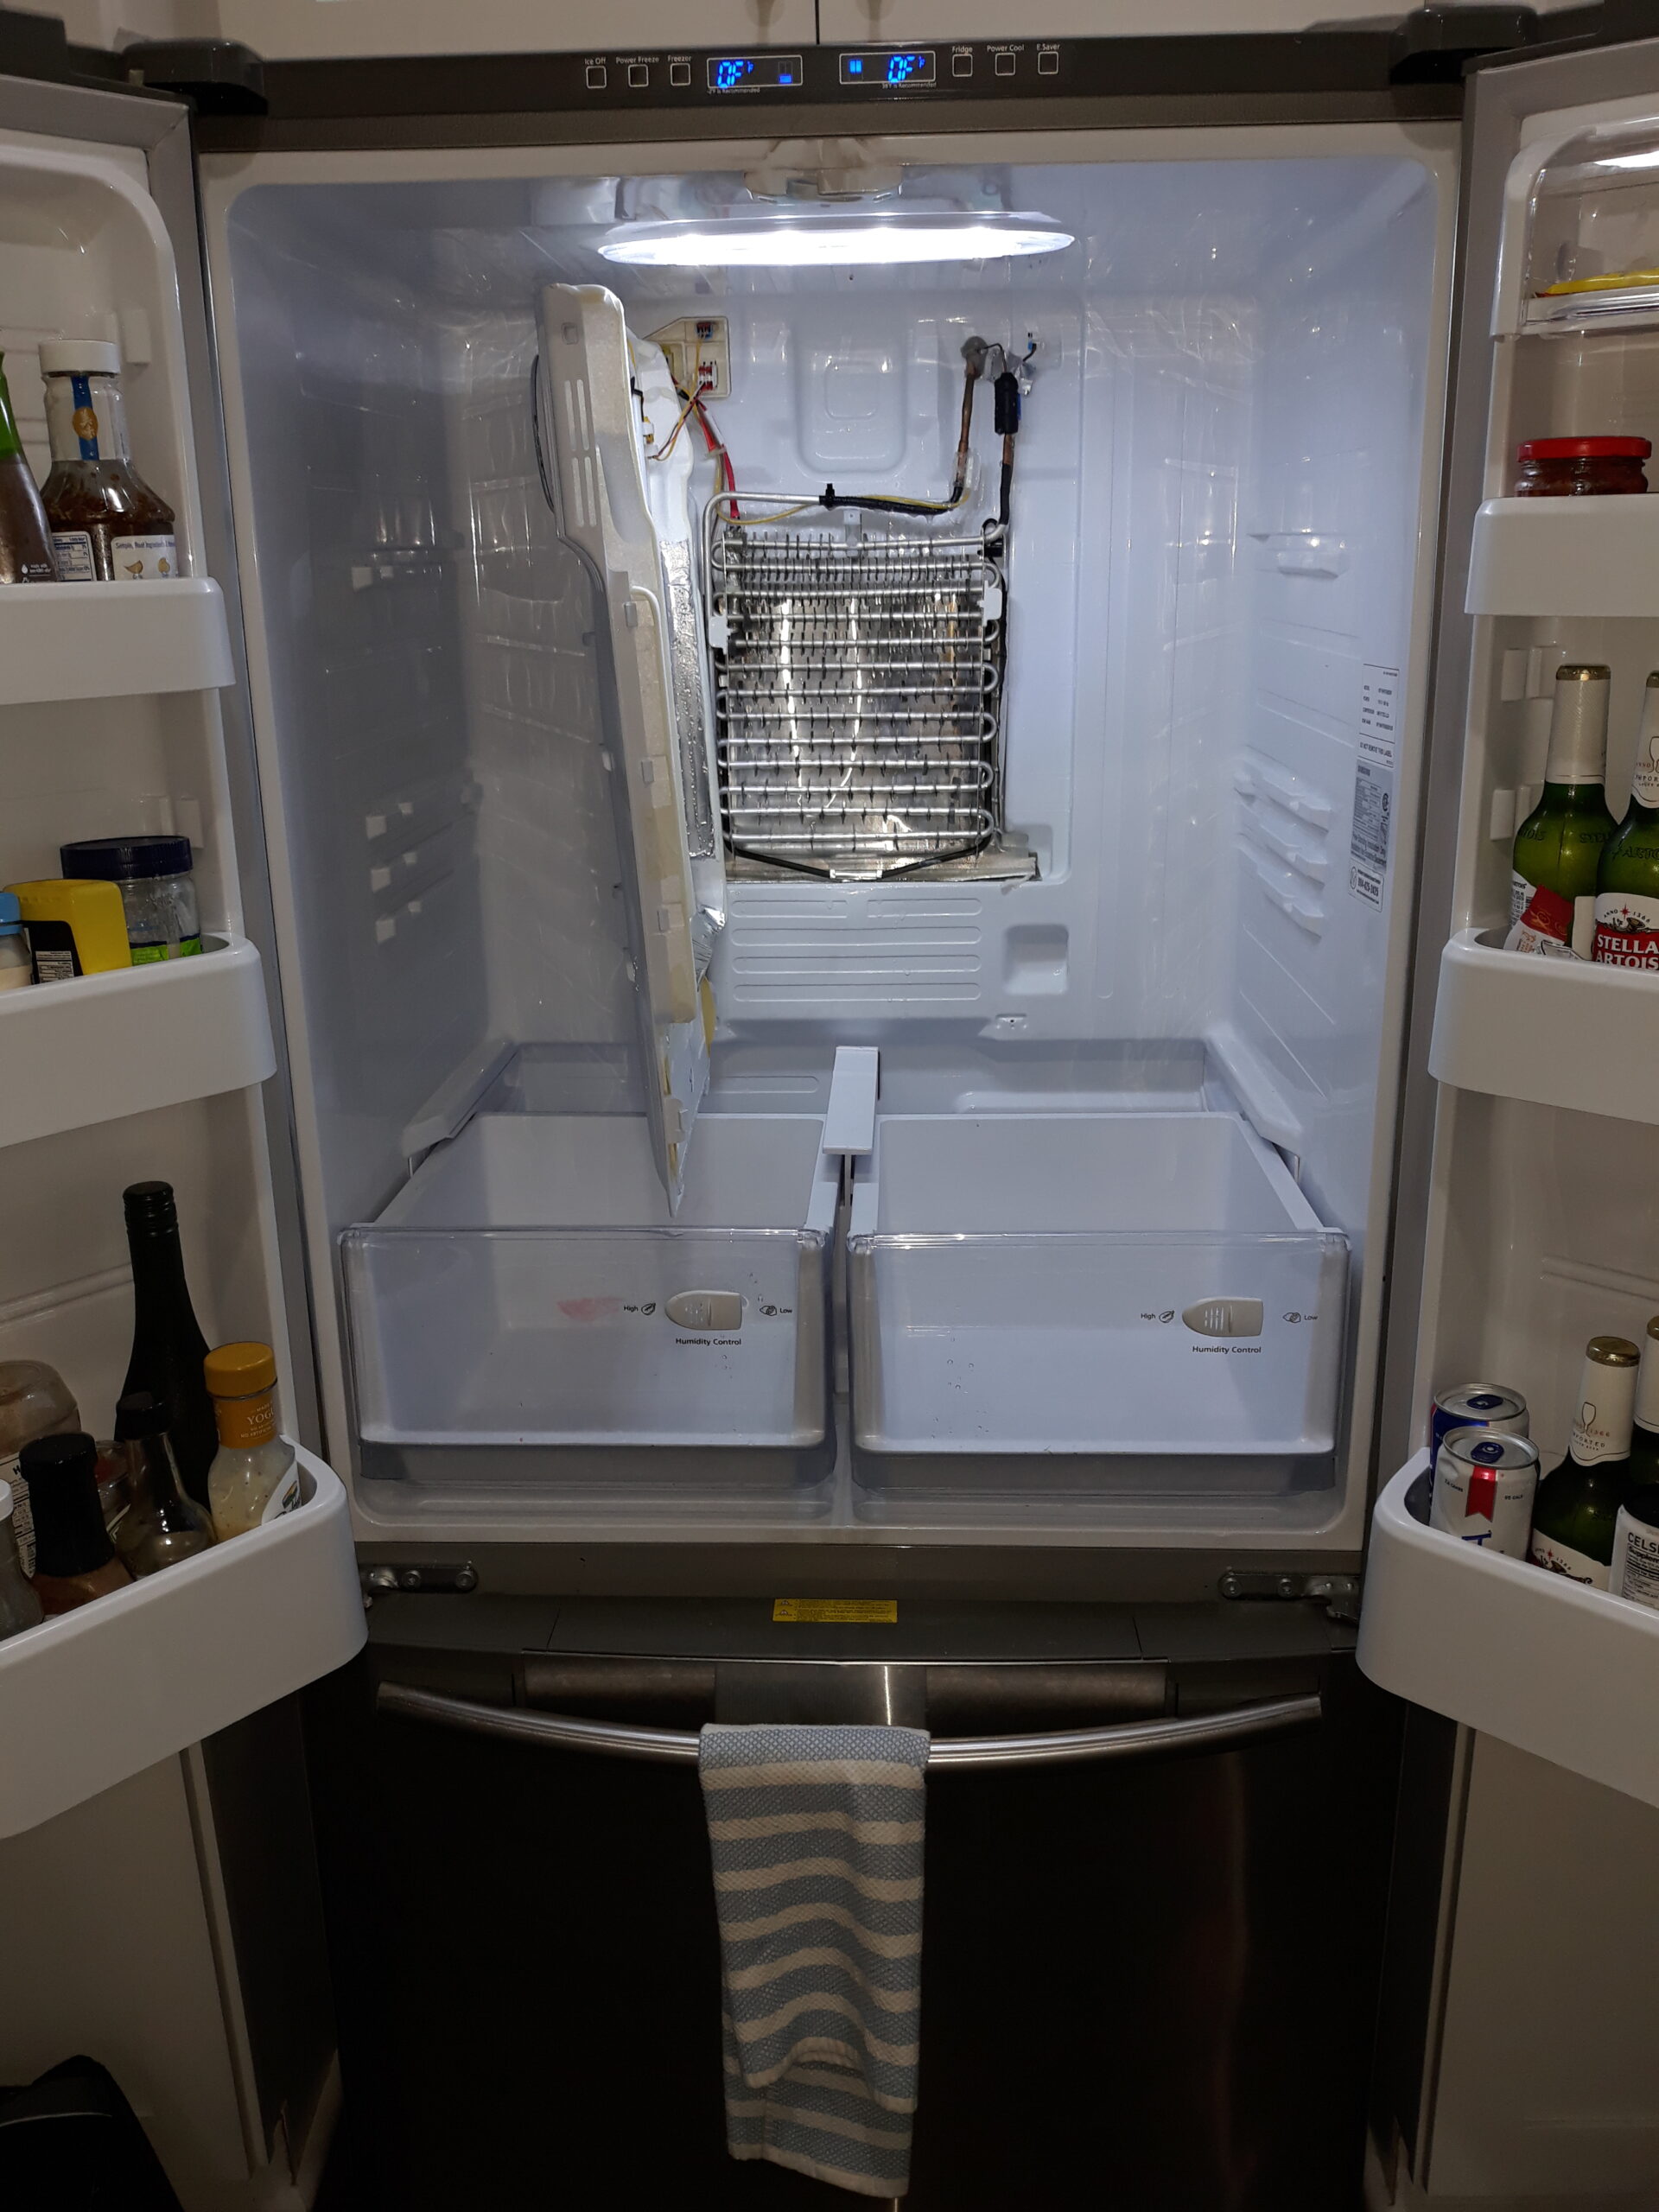 appliance repair refrigerator repair drain kit installed east palifox street char bar dr bellview fl 32526